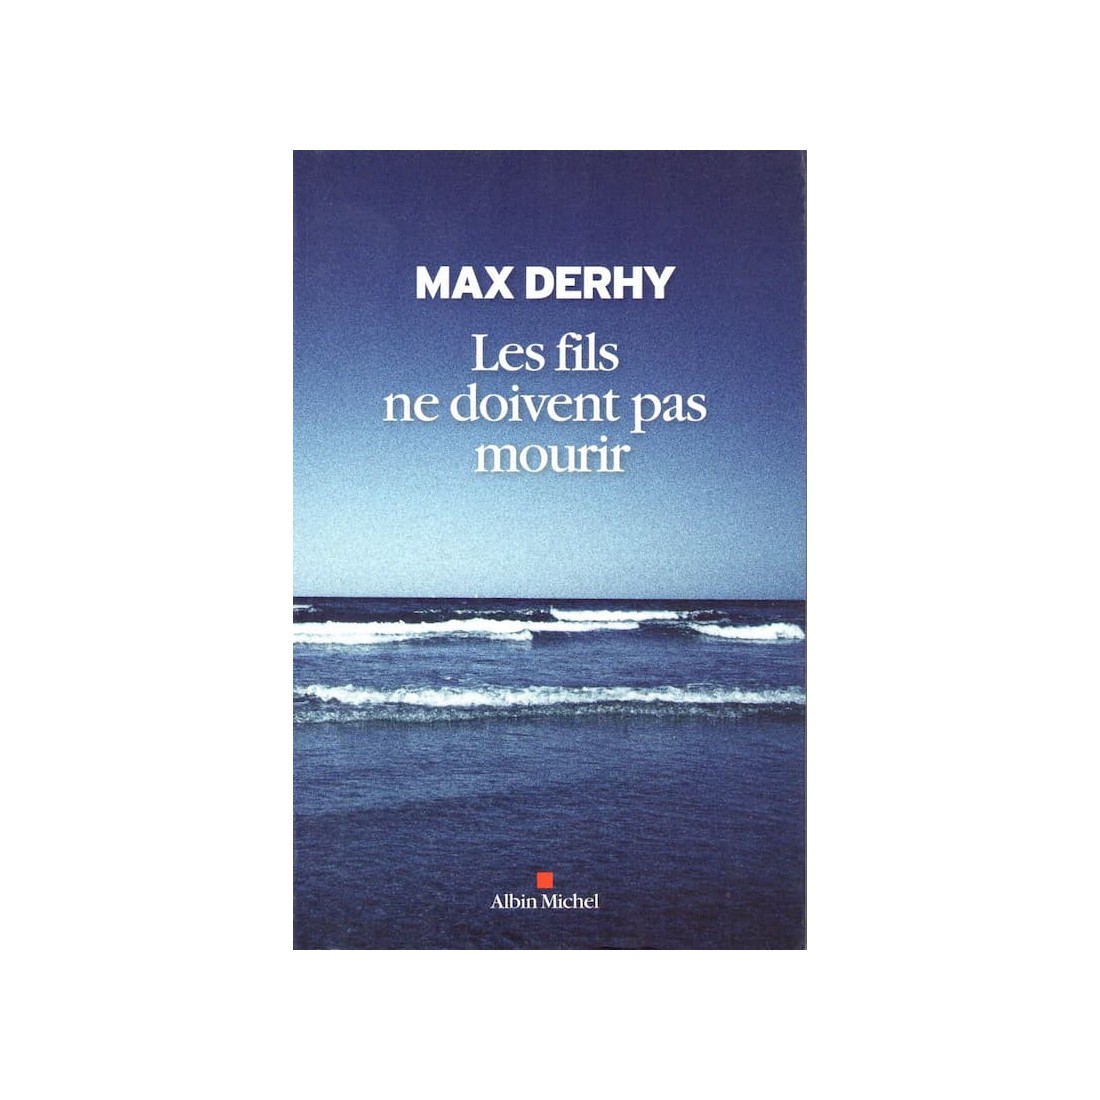 Les fils ne doivent pas mourir - Roman de Max Derhy - Ocazlivres.com